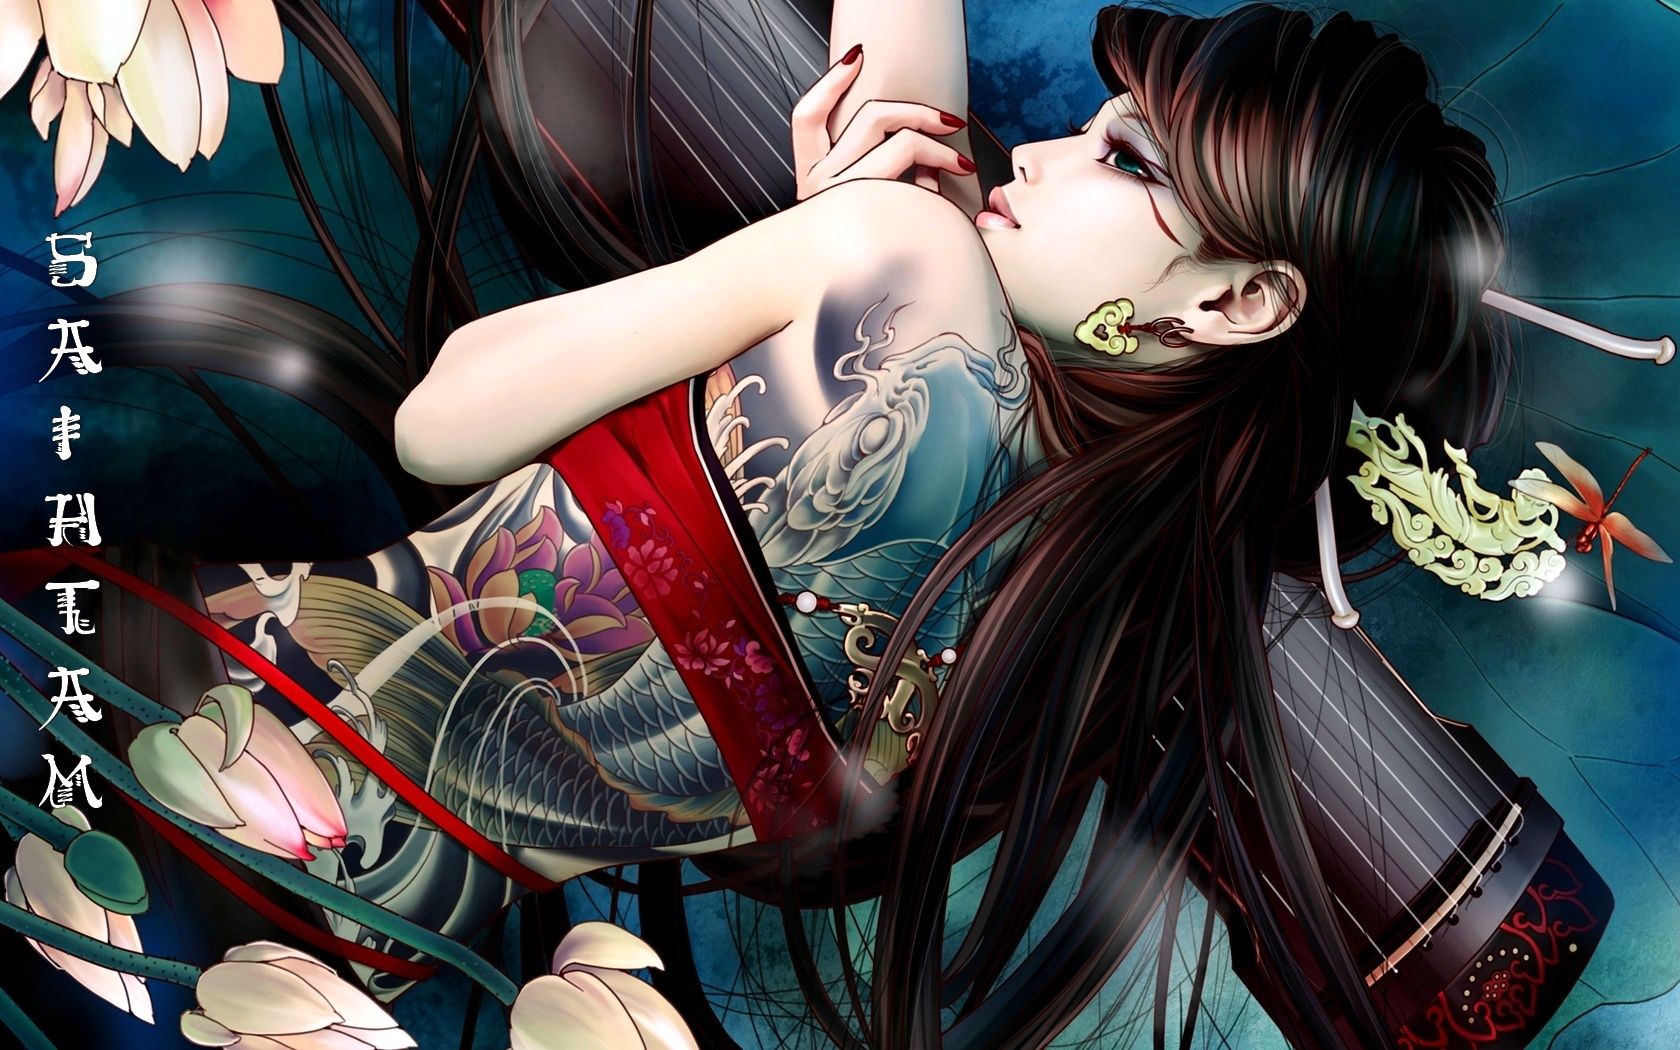 JX Online Asian Oriental babes Females Girls Tattoo Fantasy Wallpaper